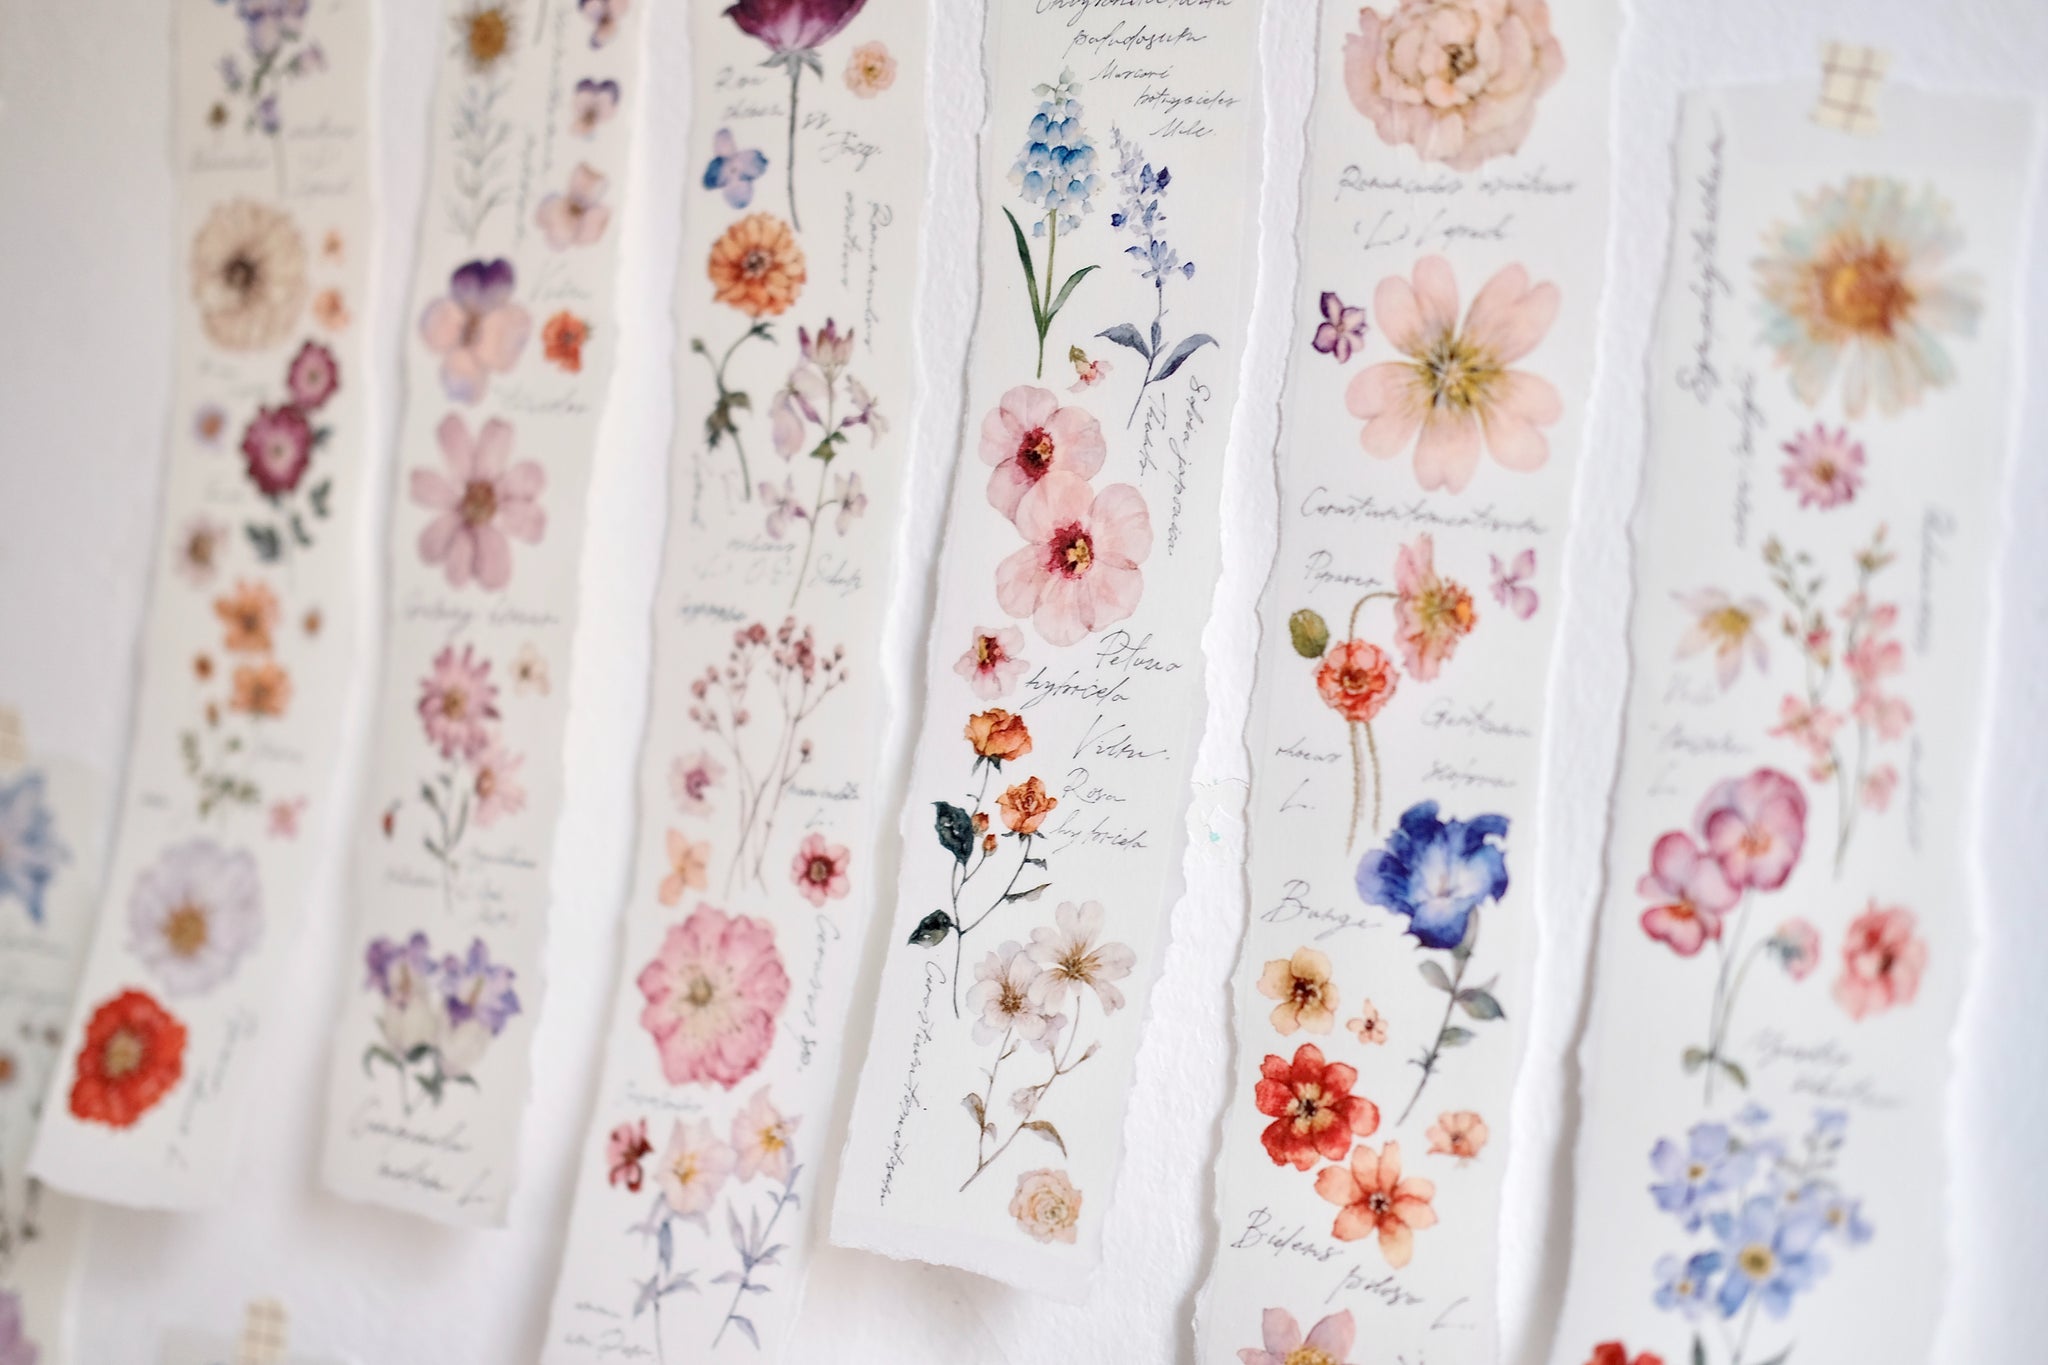 Freckles Tea Tape Sample: Flower Illustrated Handbook